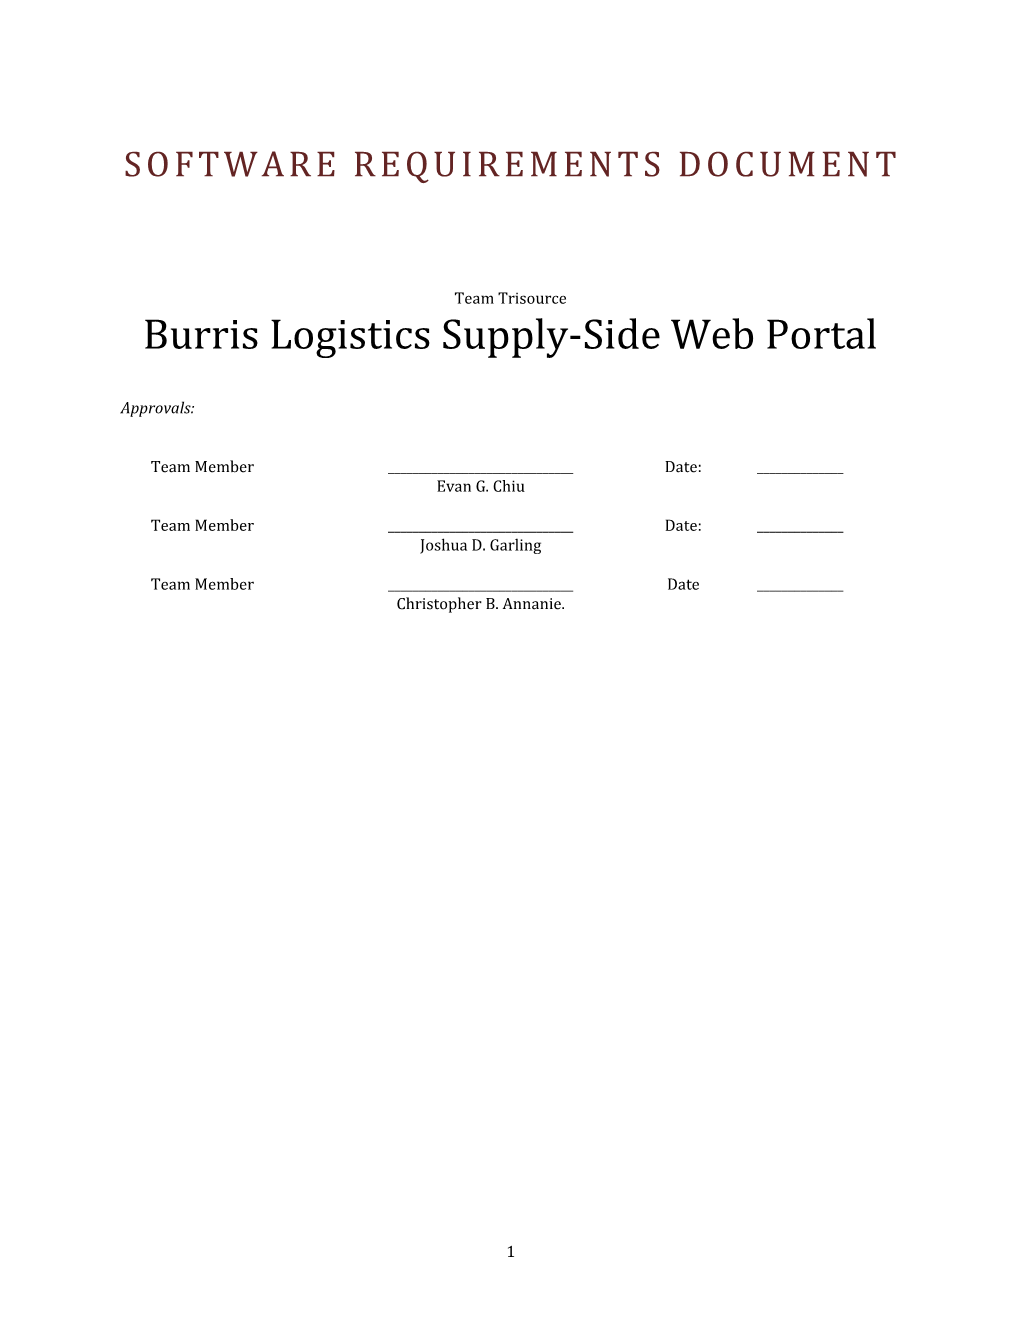 Softwarerequirements Document